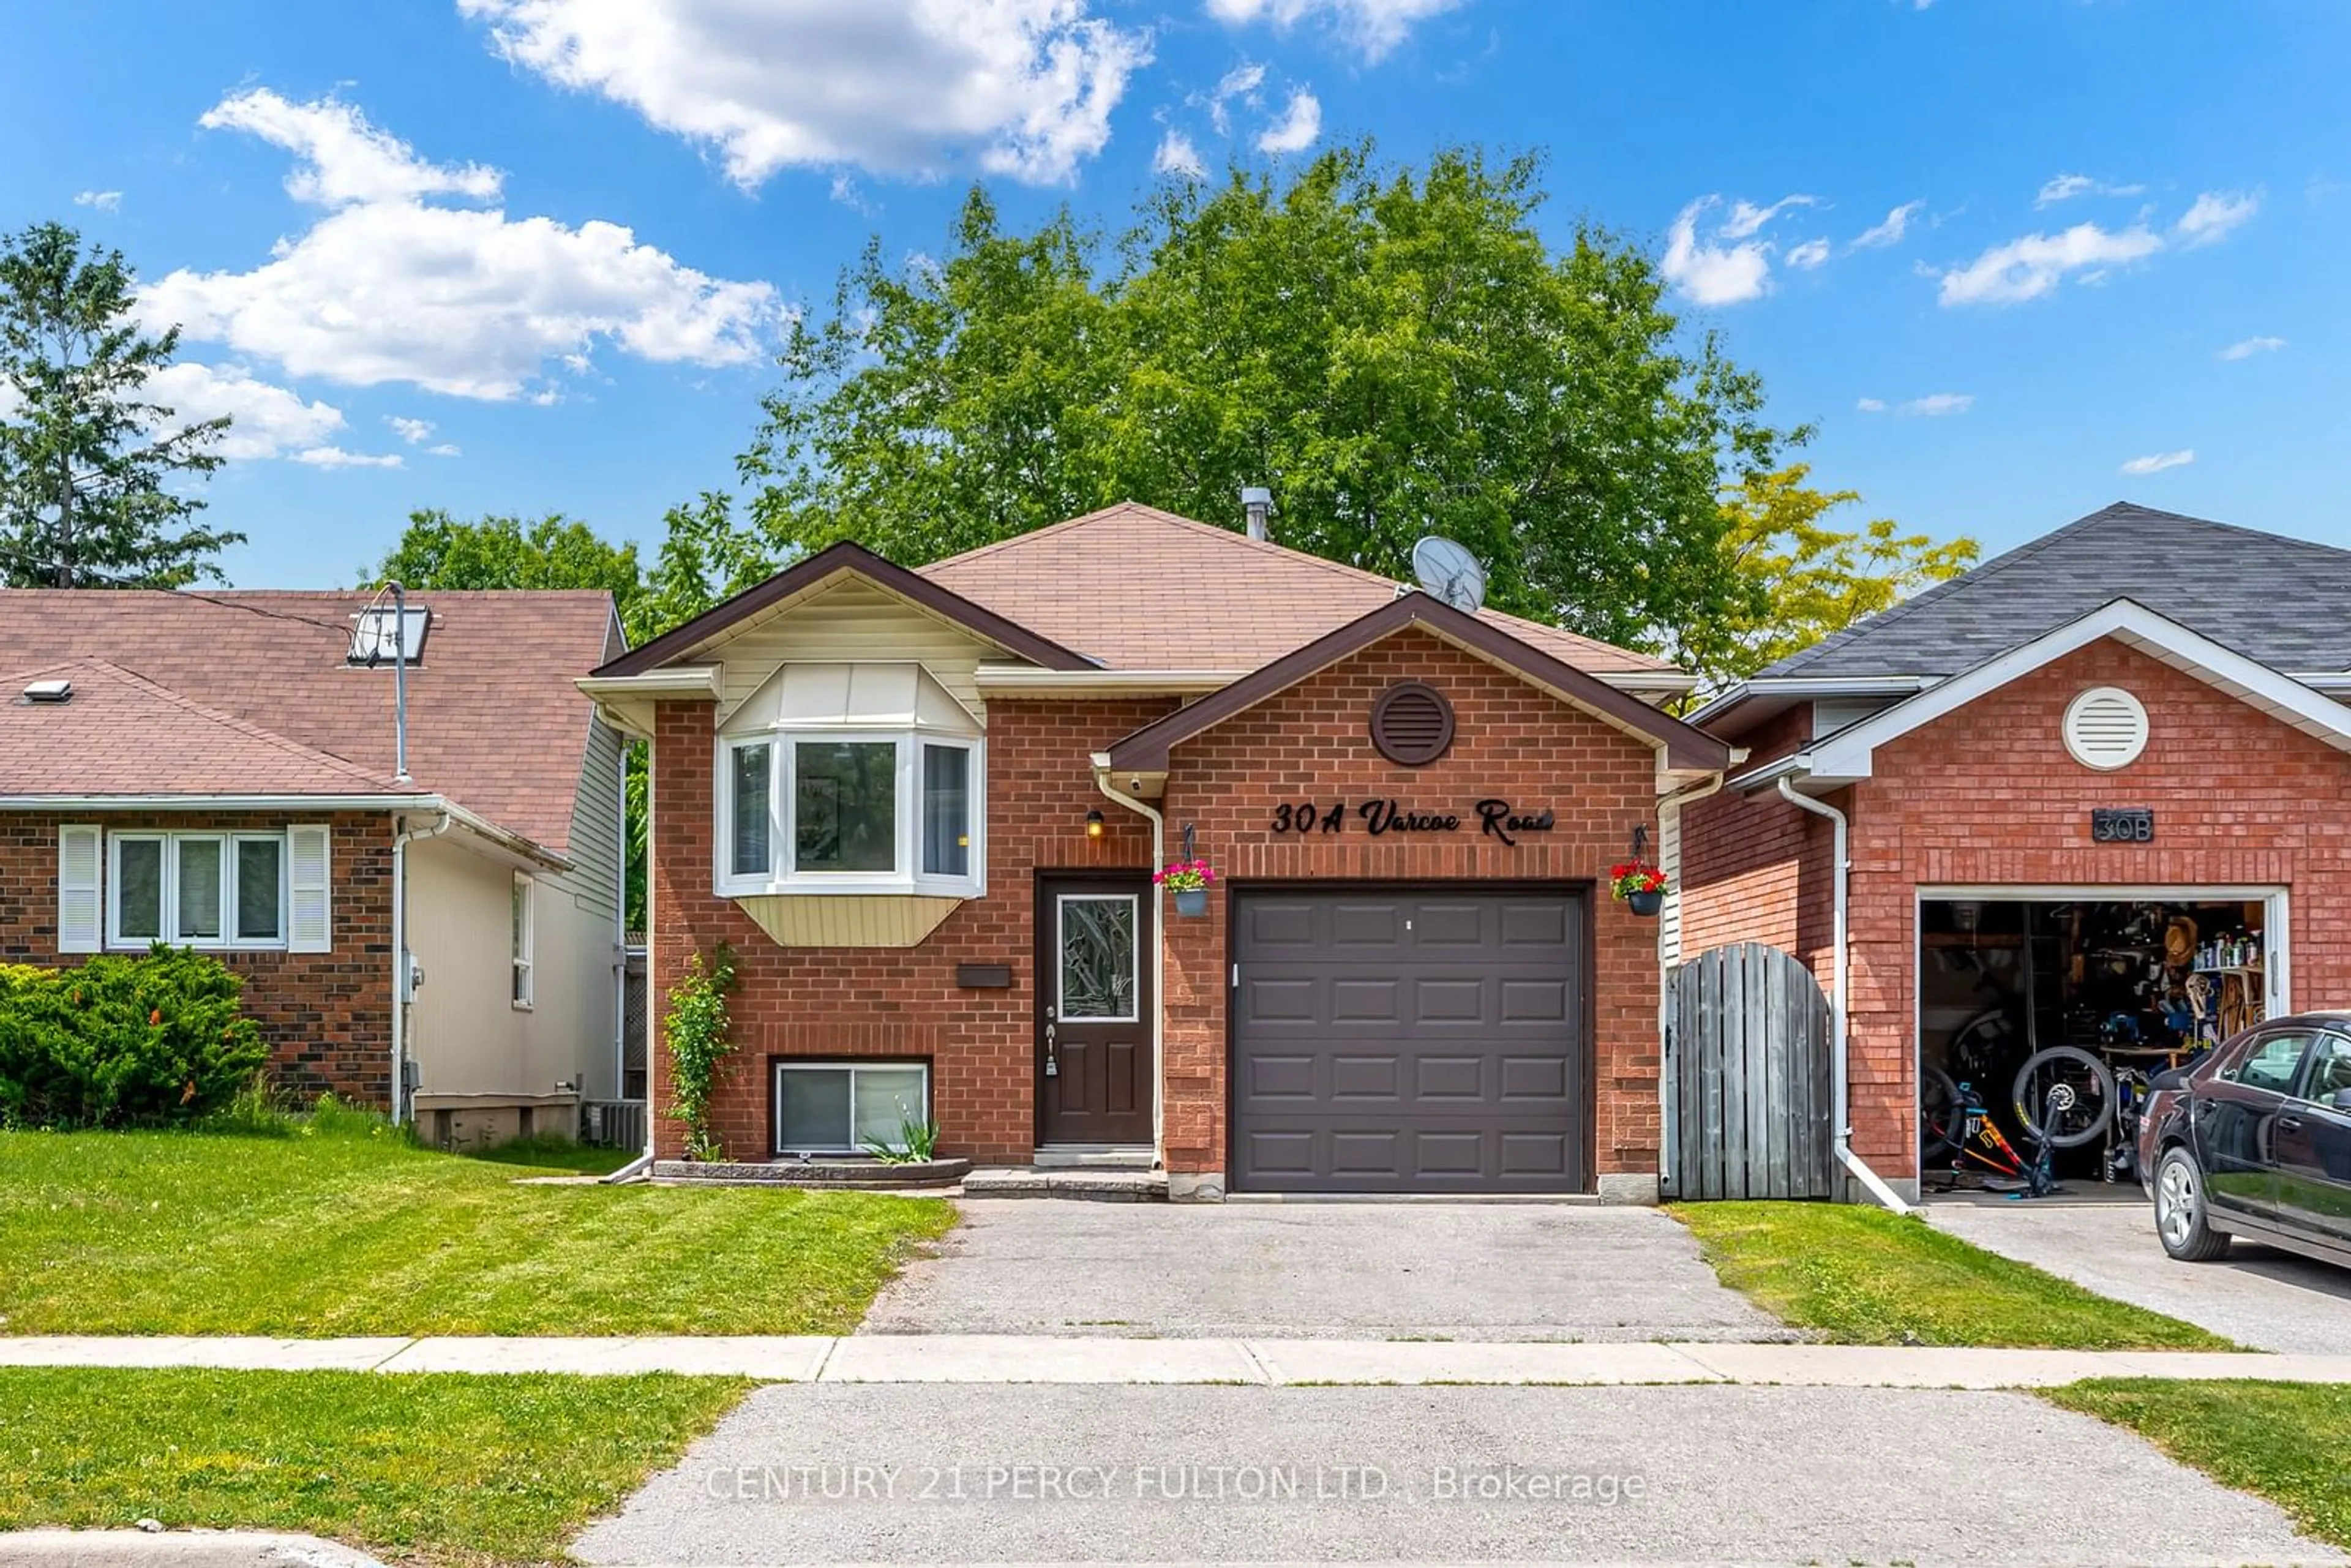 Home with brick exterior material for 30A Varcoe Rd, Clarington Ontario L1E 2T7